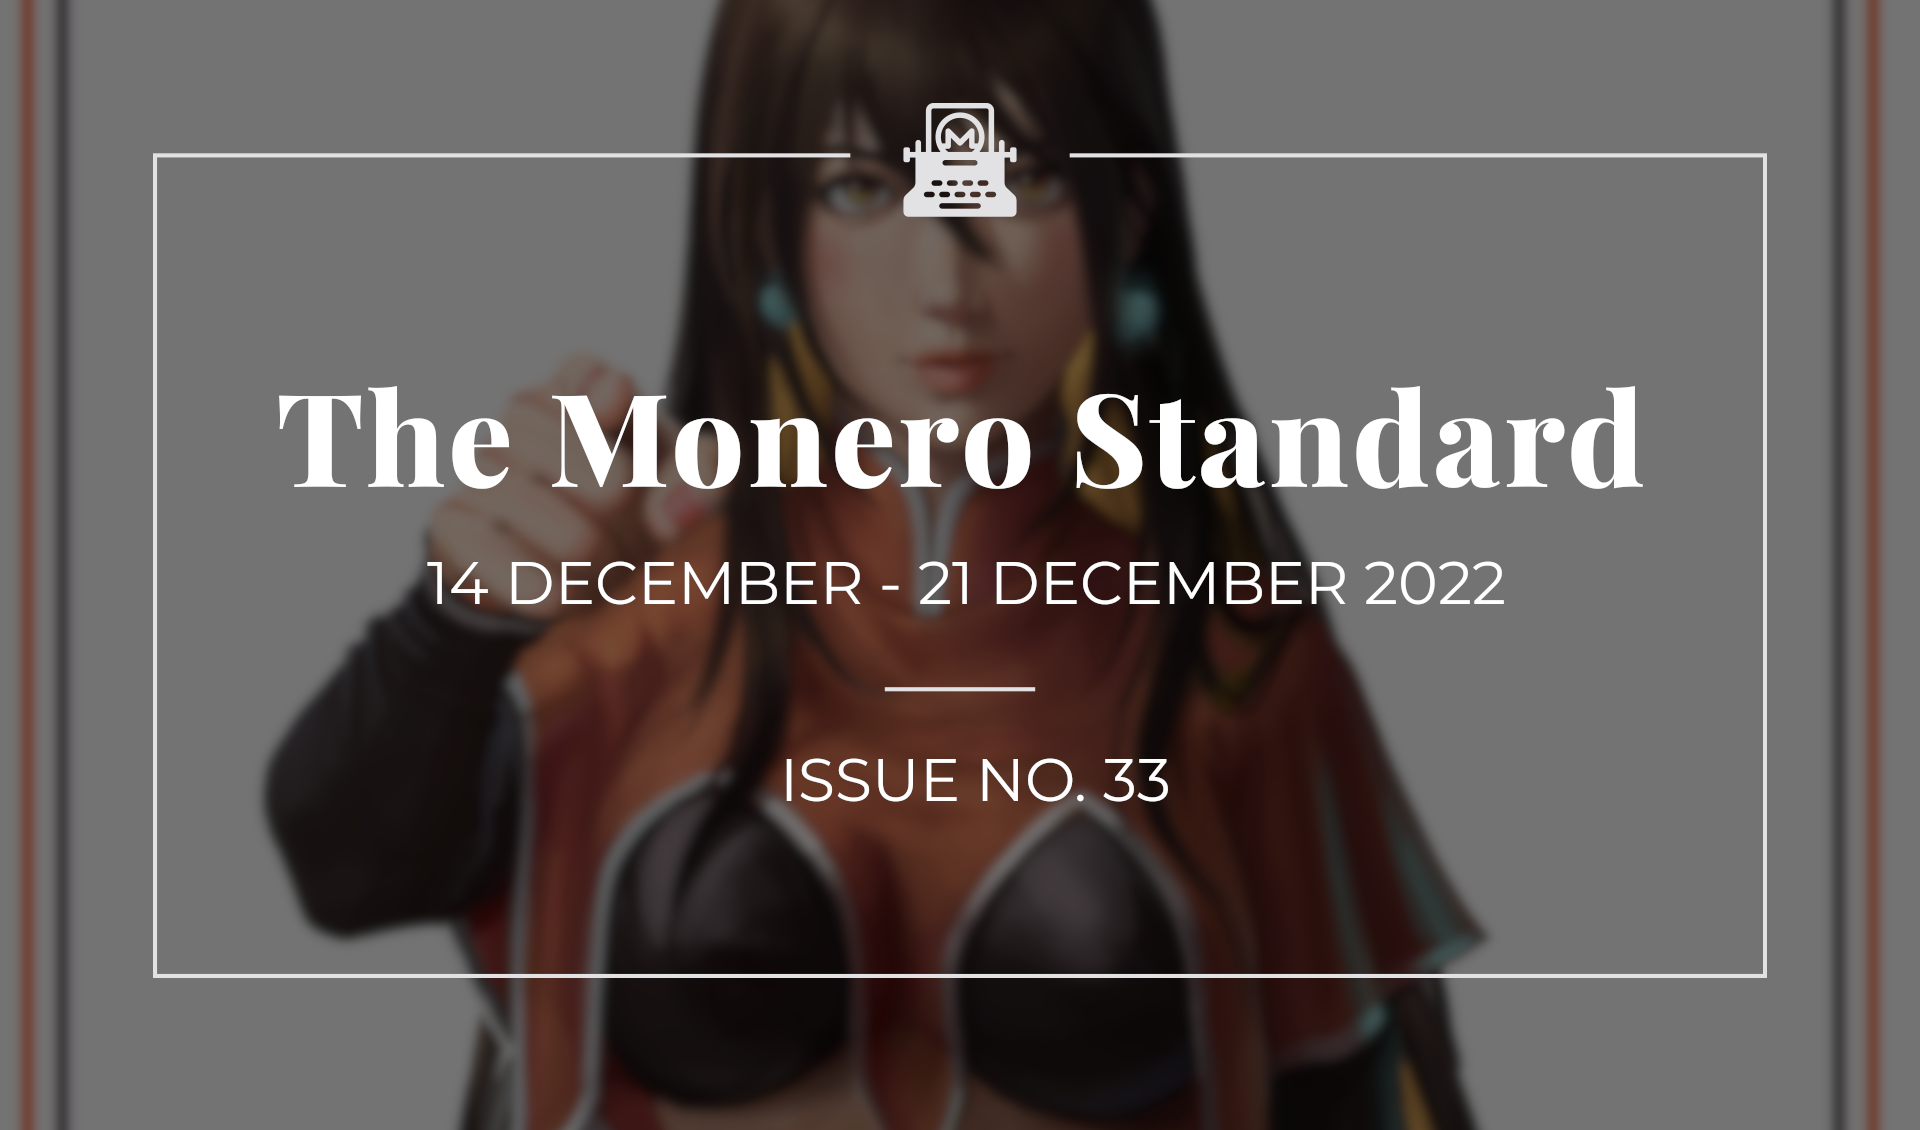 The Monero Standard #33: 14 December 2022 - 21 December 2022